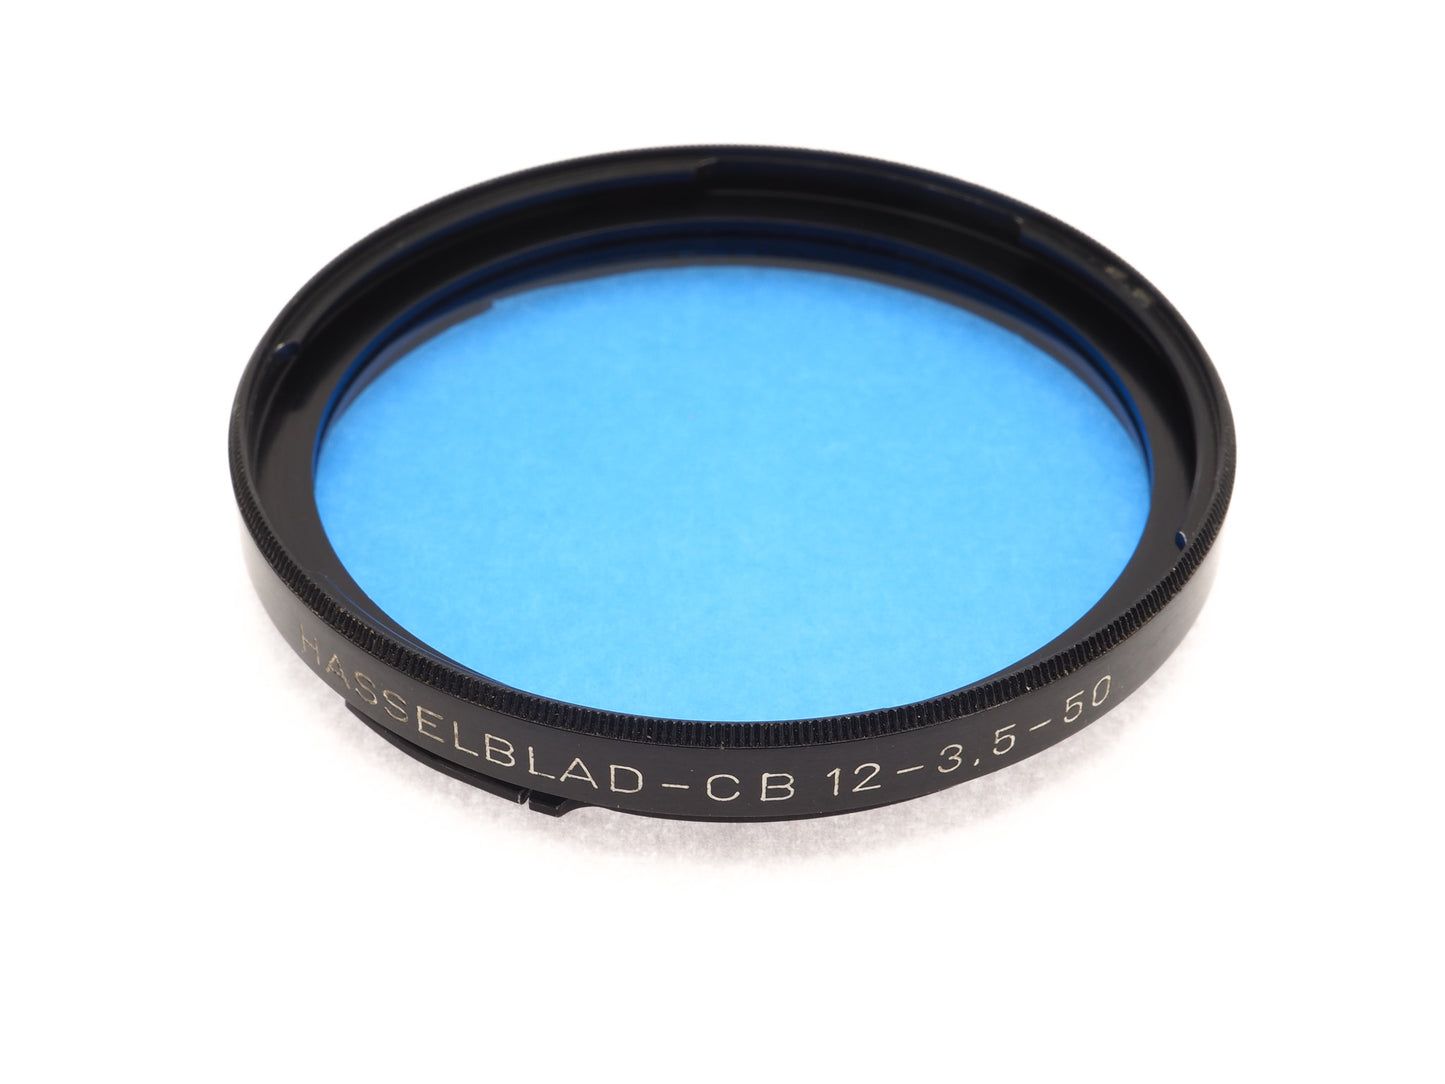 Hasselblad B50 Color Balance CB 12 -3.5 Filter - Accessory